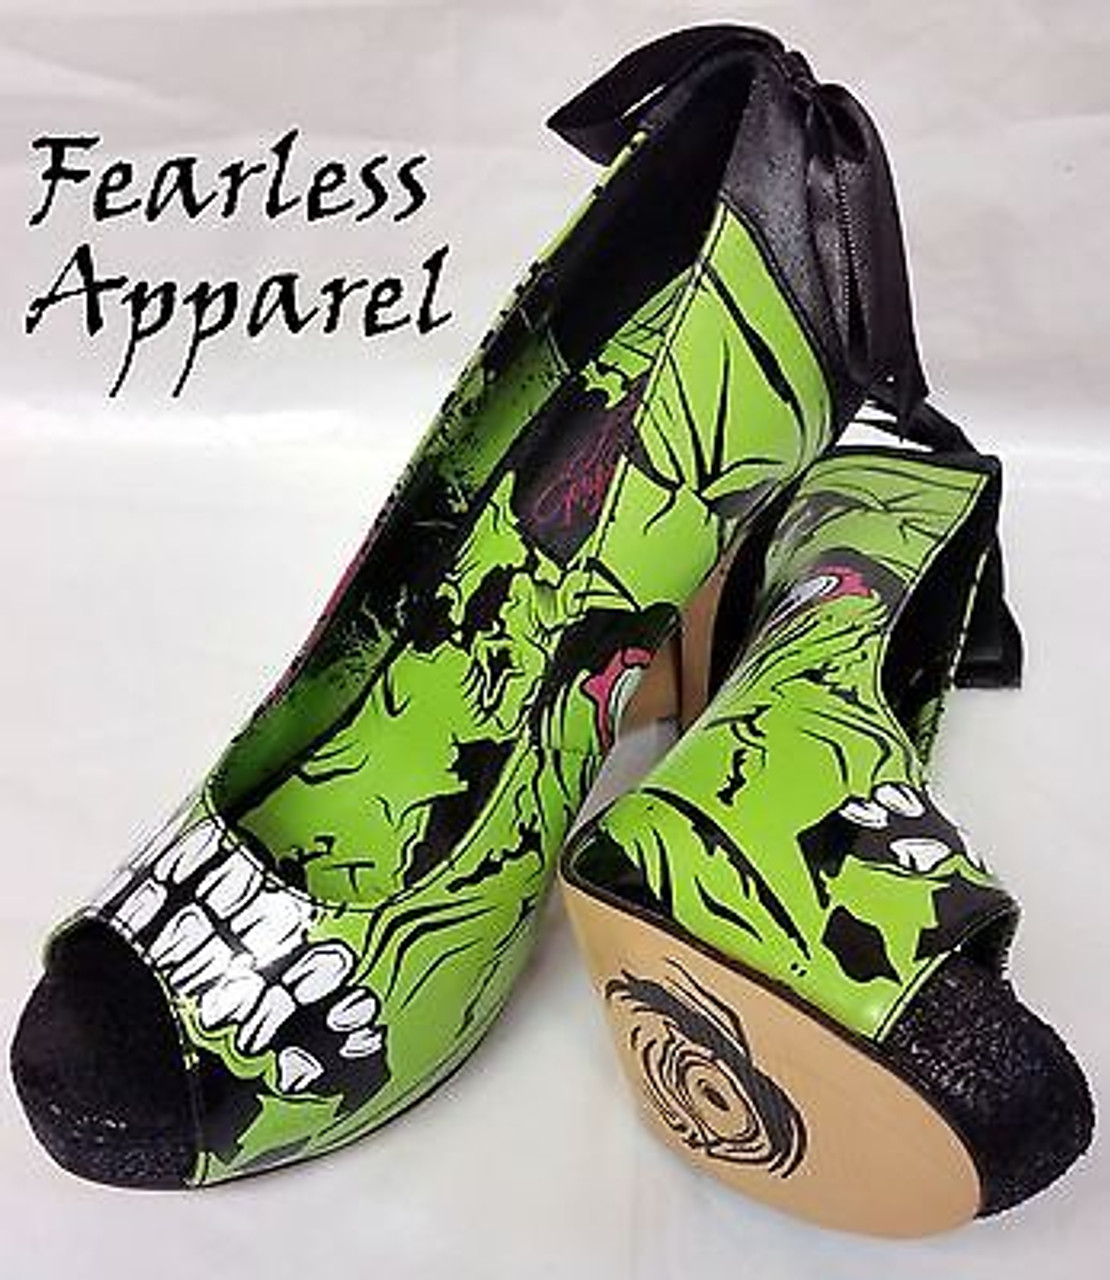 Iron Fist Zombie Stomper platform high heels green peep toe pump size 7  (38) | eBay